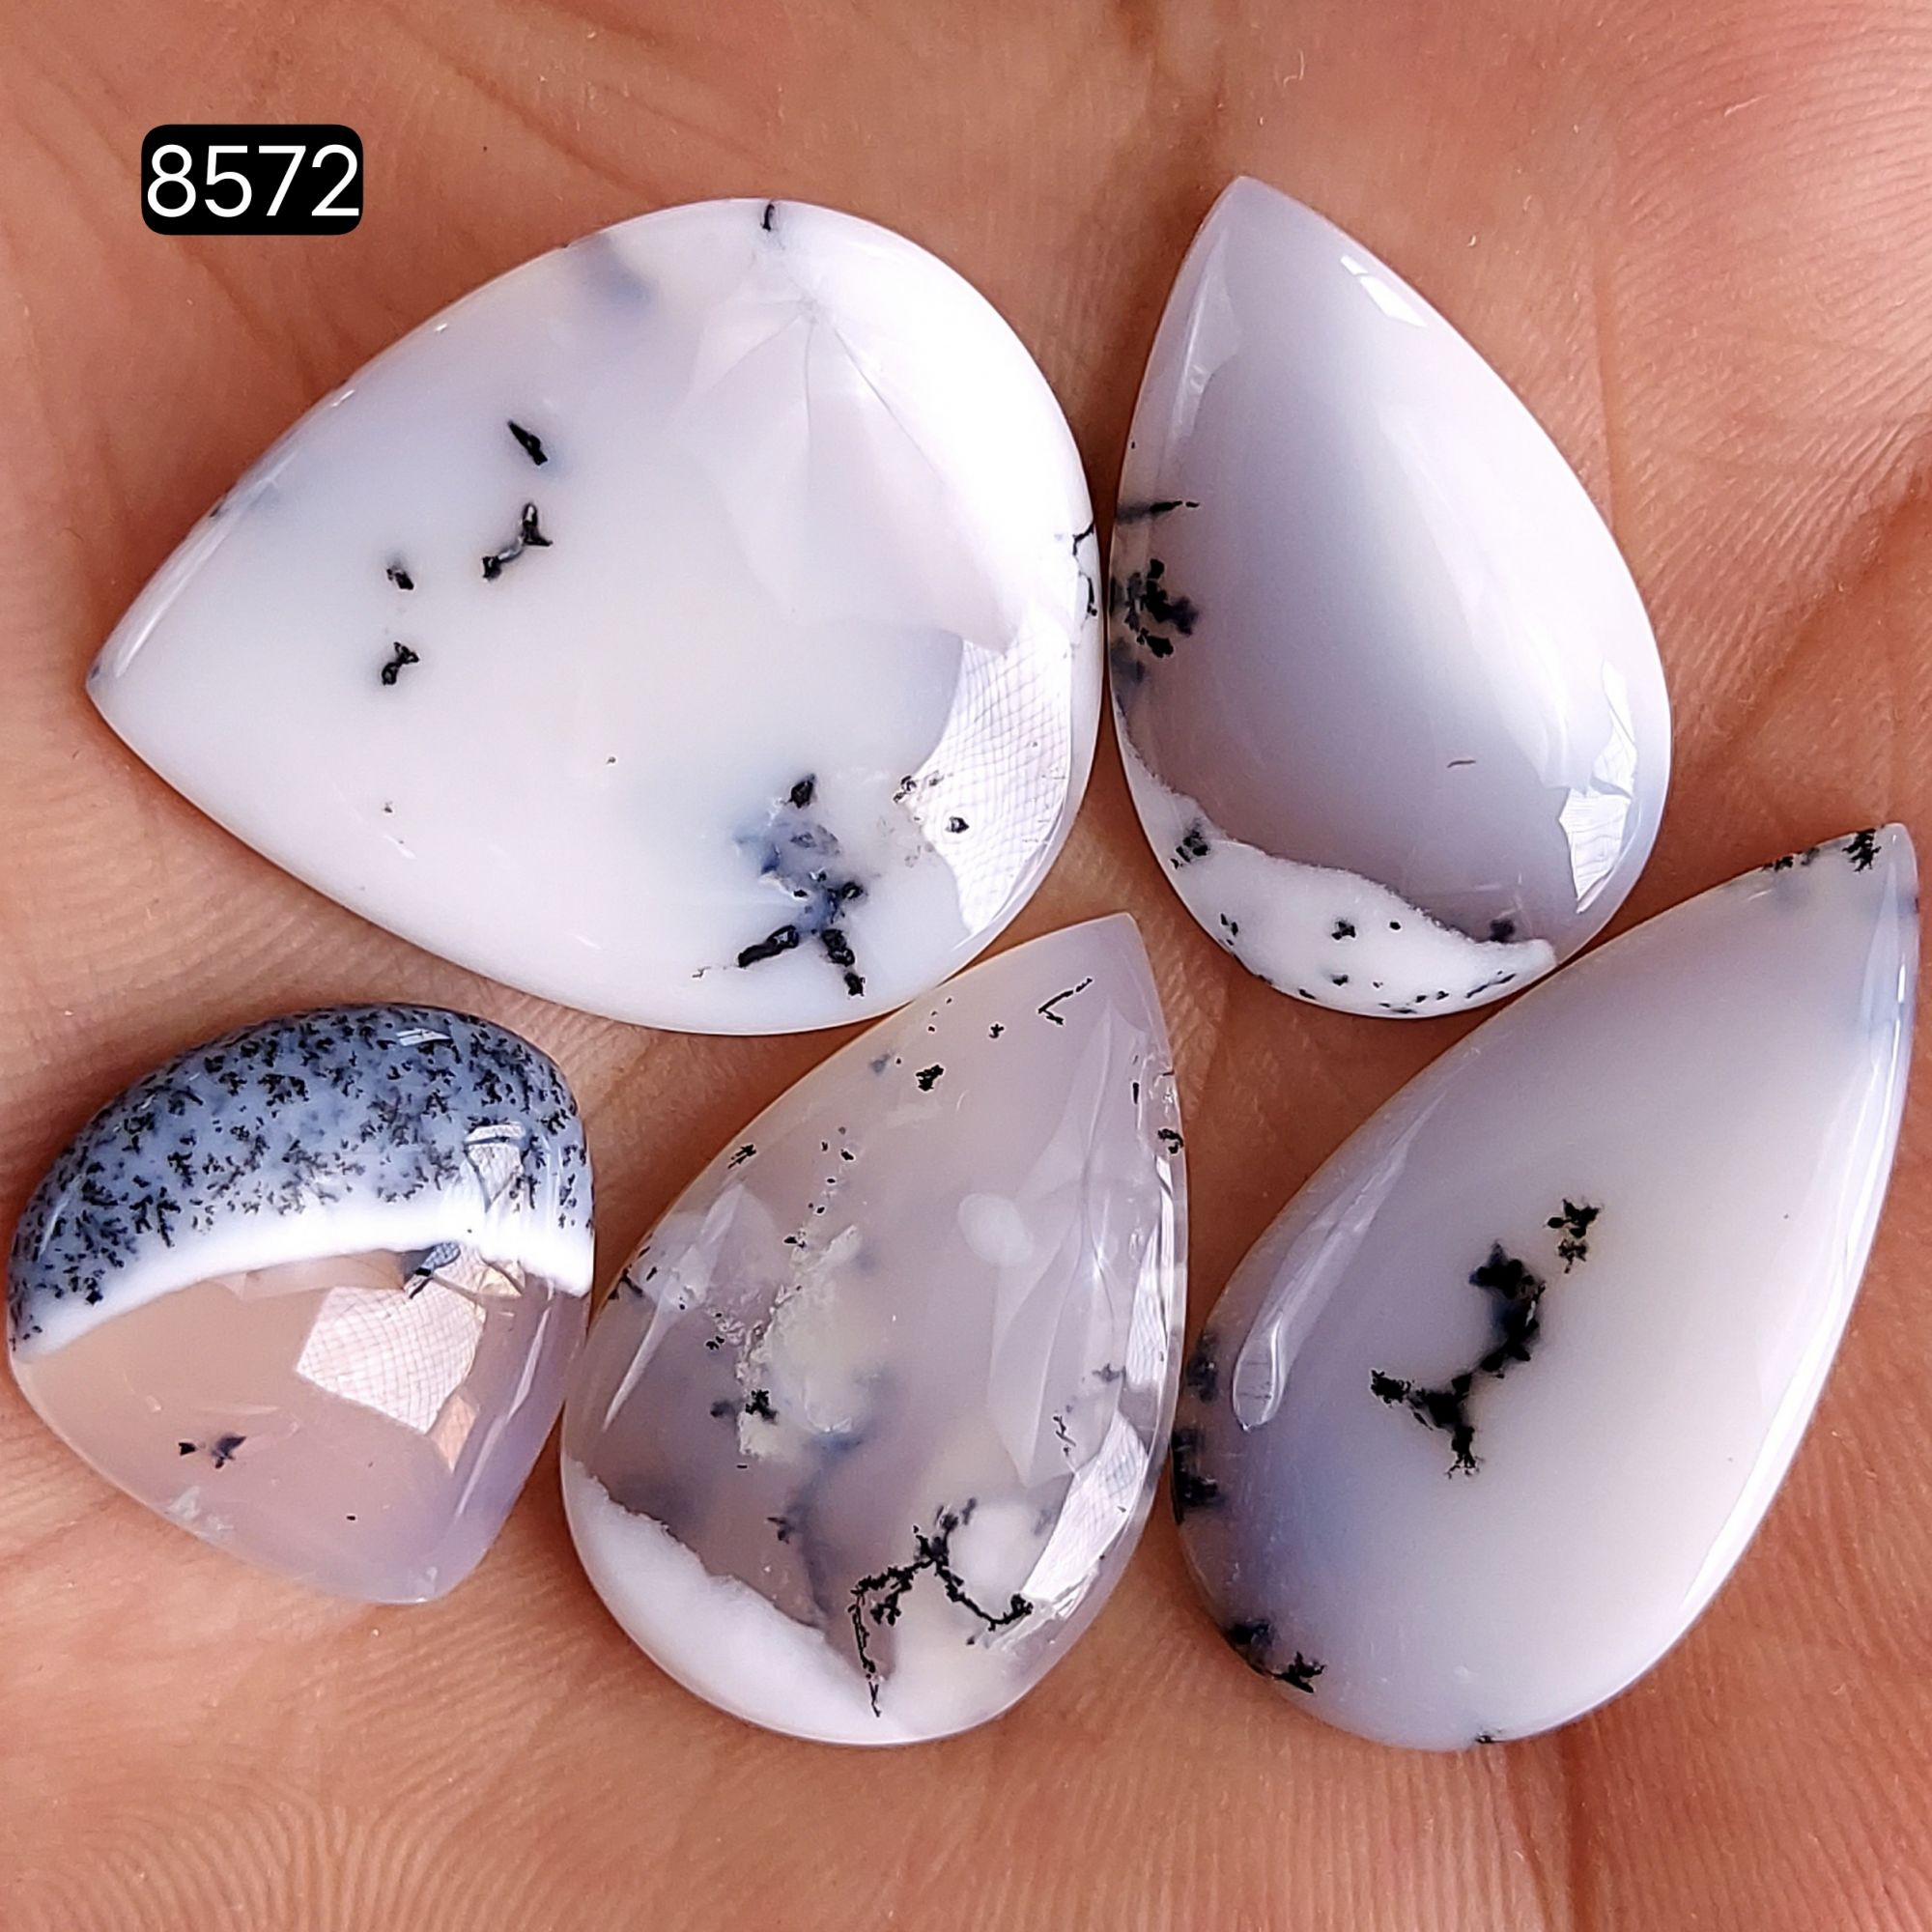 5Pcs 102Cts Dendrite Opal Gemstone Black White Design Dendrite Opal Cabochon, Flat Back Dendrite Opal Stone Both Side Polished Dendrite Opal Stone 34x18 20x19mm #8572